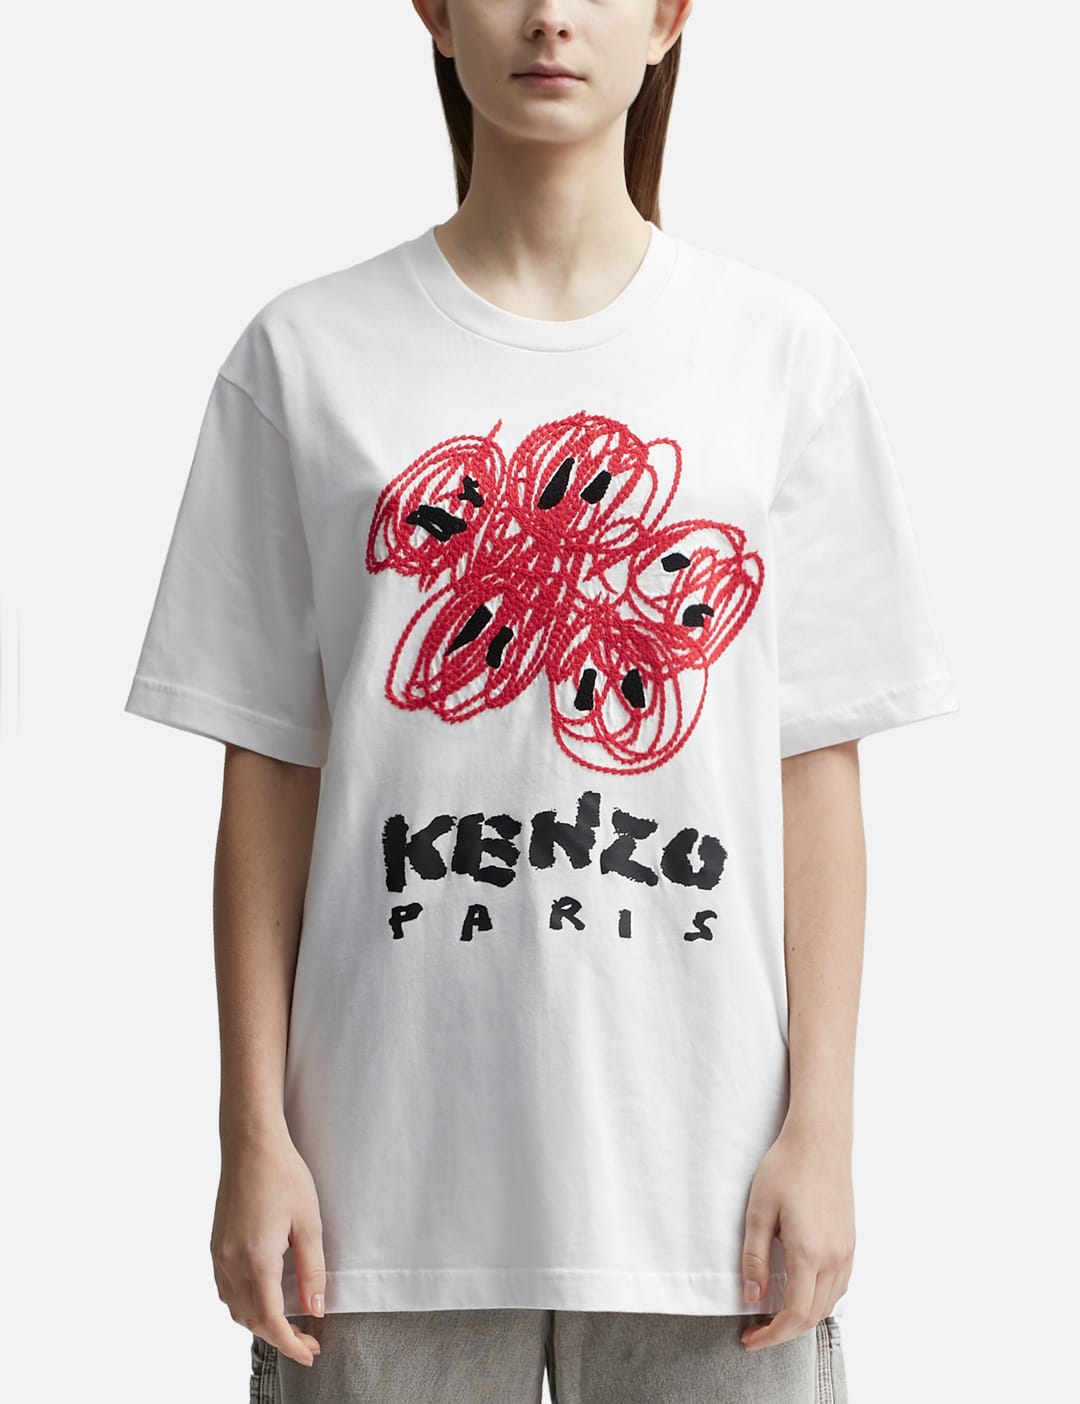 Kenzo - Drawn Varsity Classic T-shirt | HBX - Globally Curated